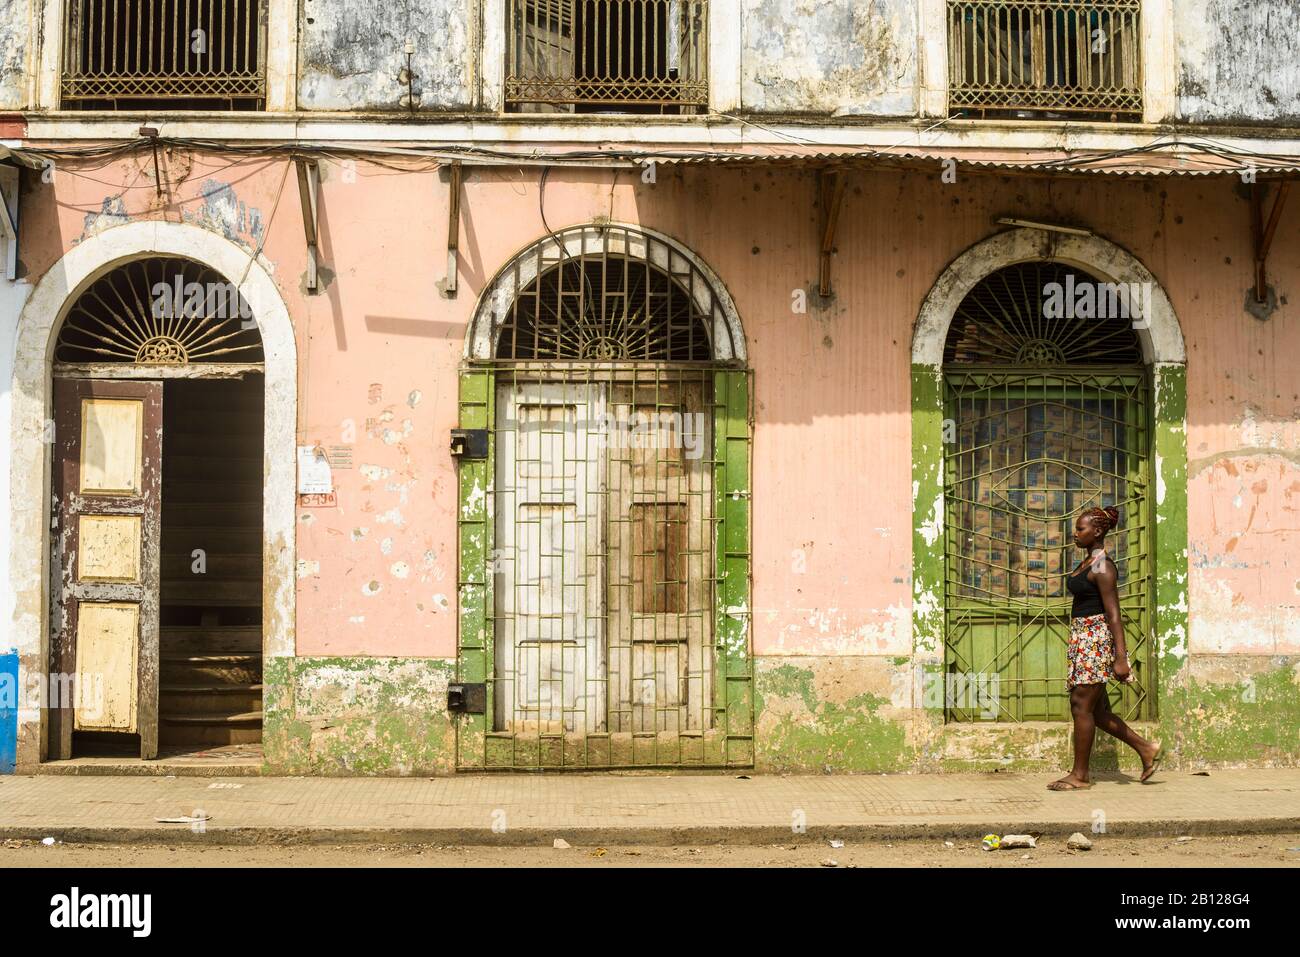 City of Sao Tome, Sao Tome e Principe Stock Photo